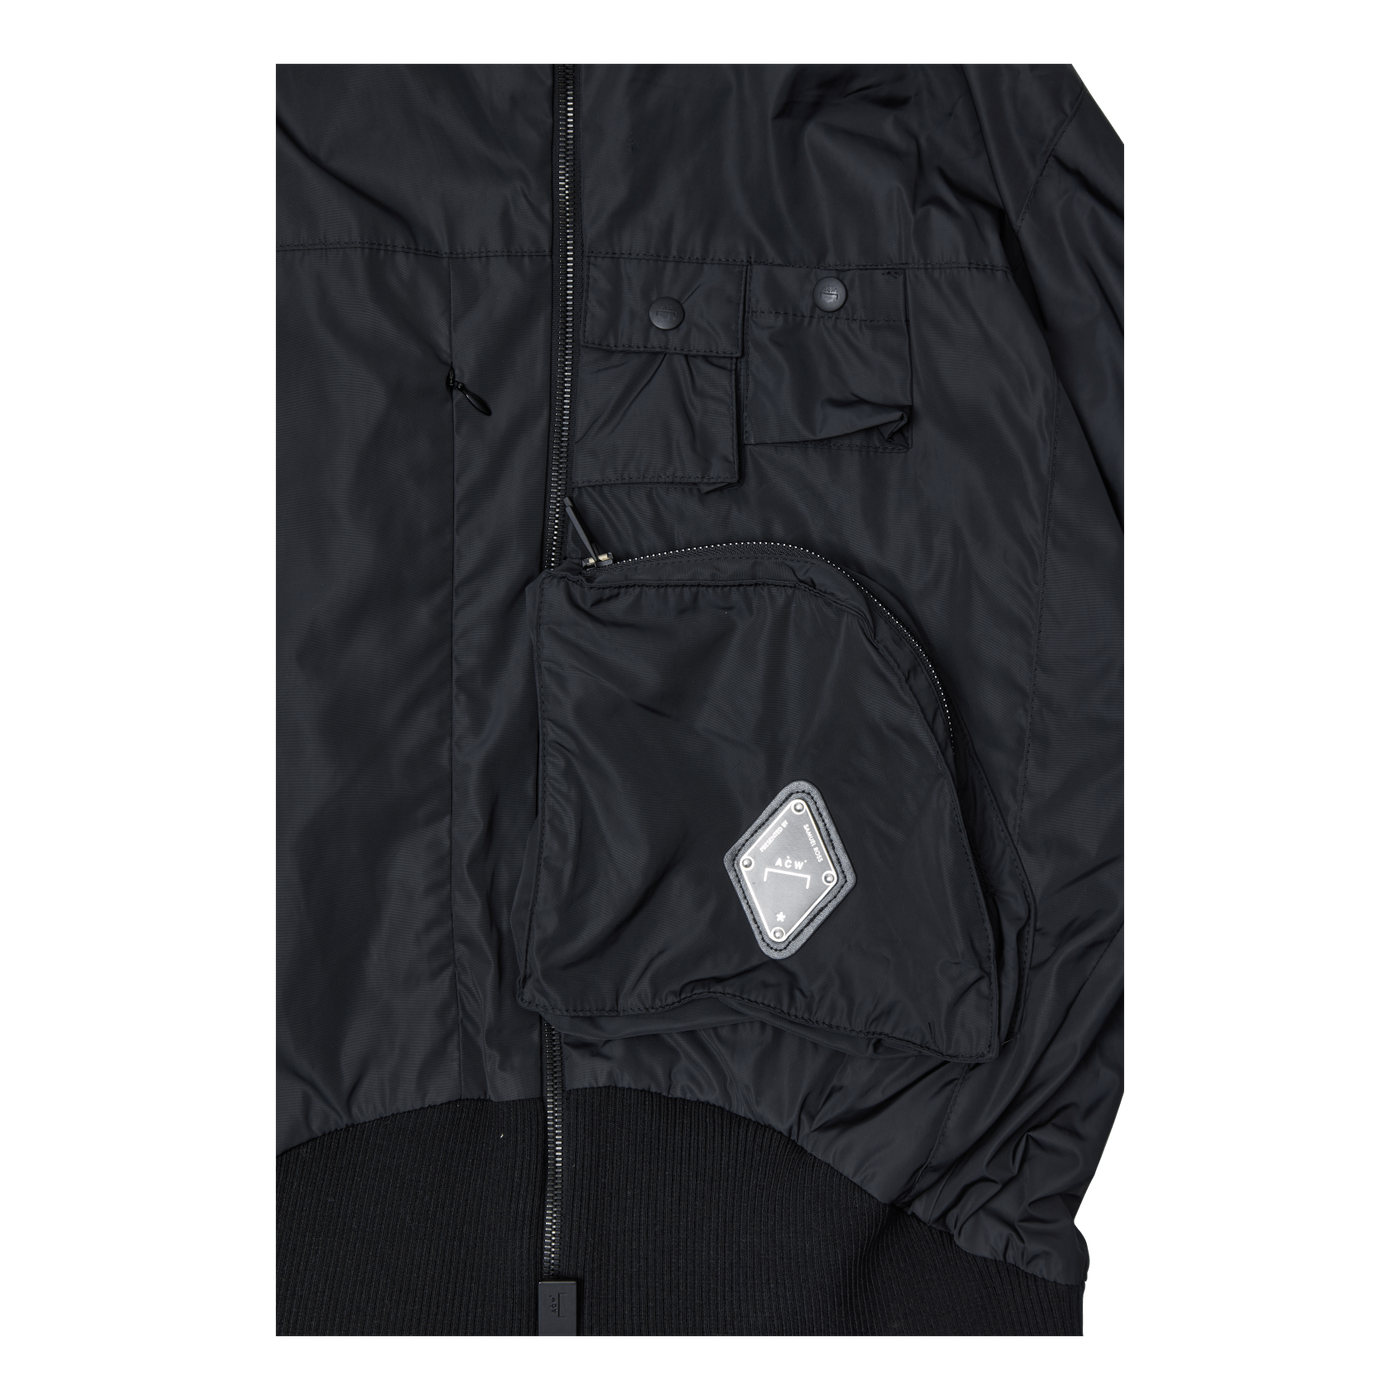 Ventral Jacket With Asymmetric Black